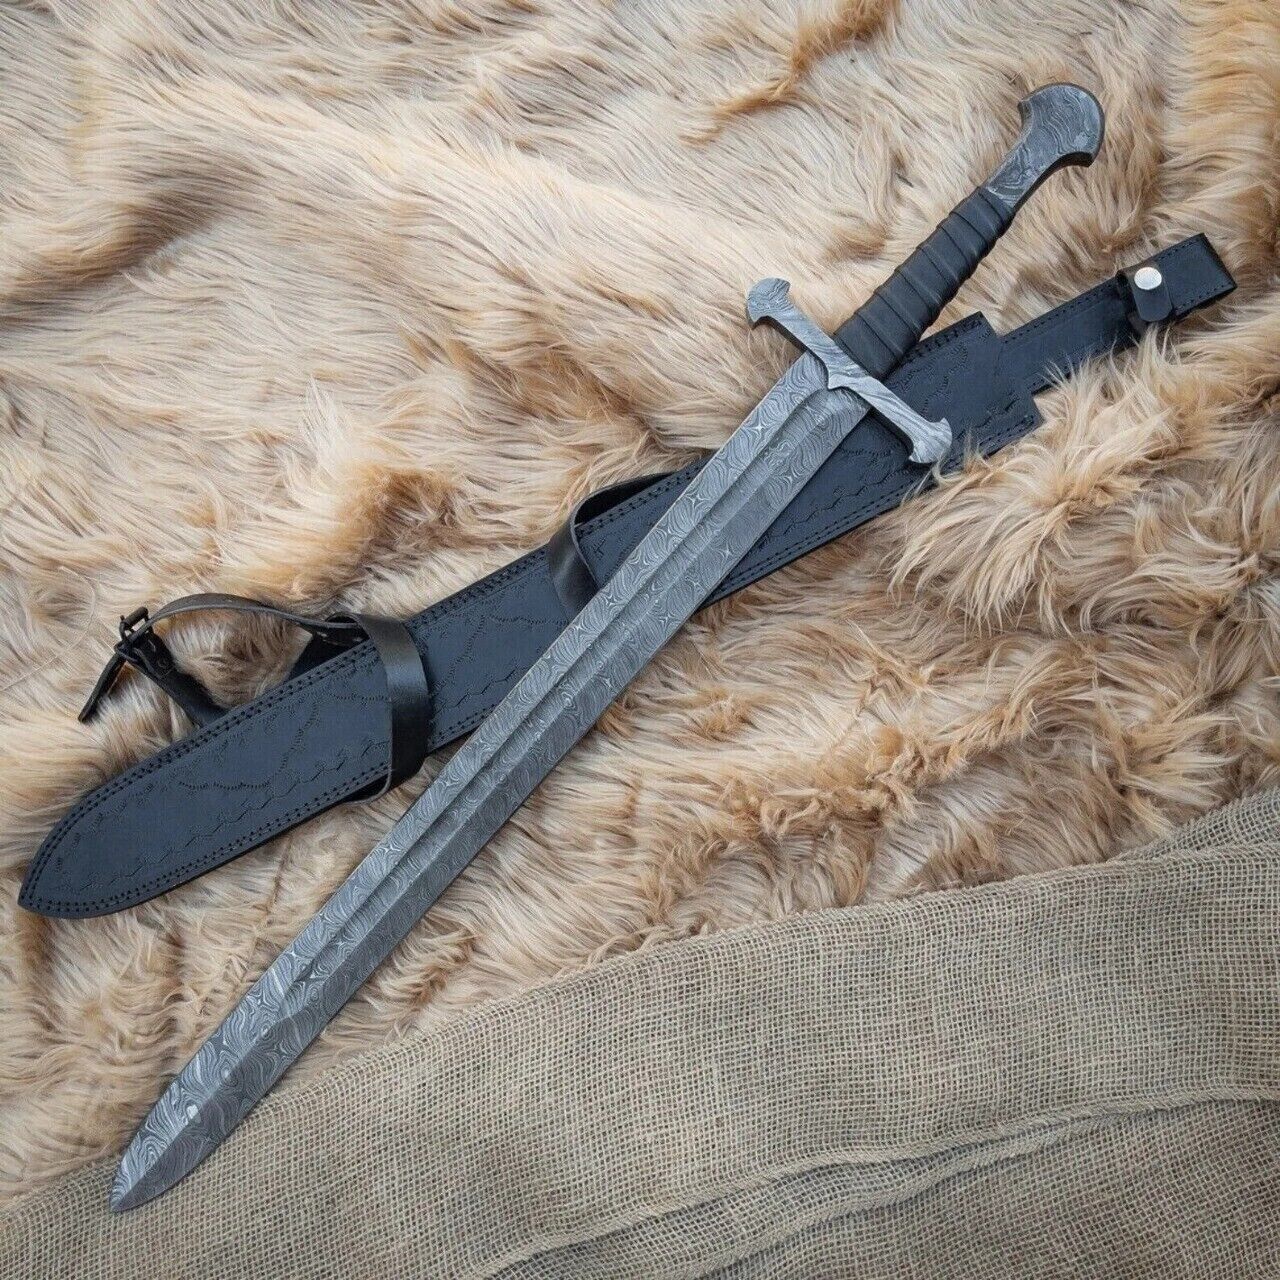 Handmade Forged 30 inches Damascus Steel Viking Sword Sharp / Battle Ready sword